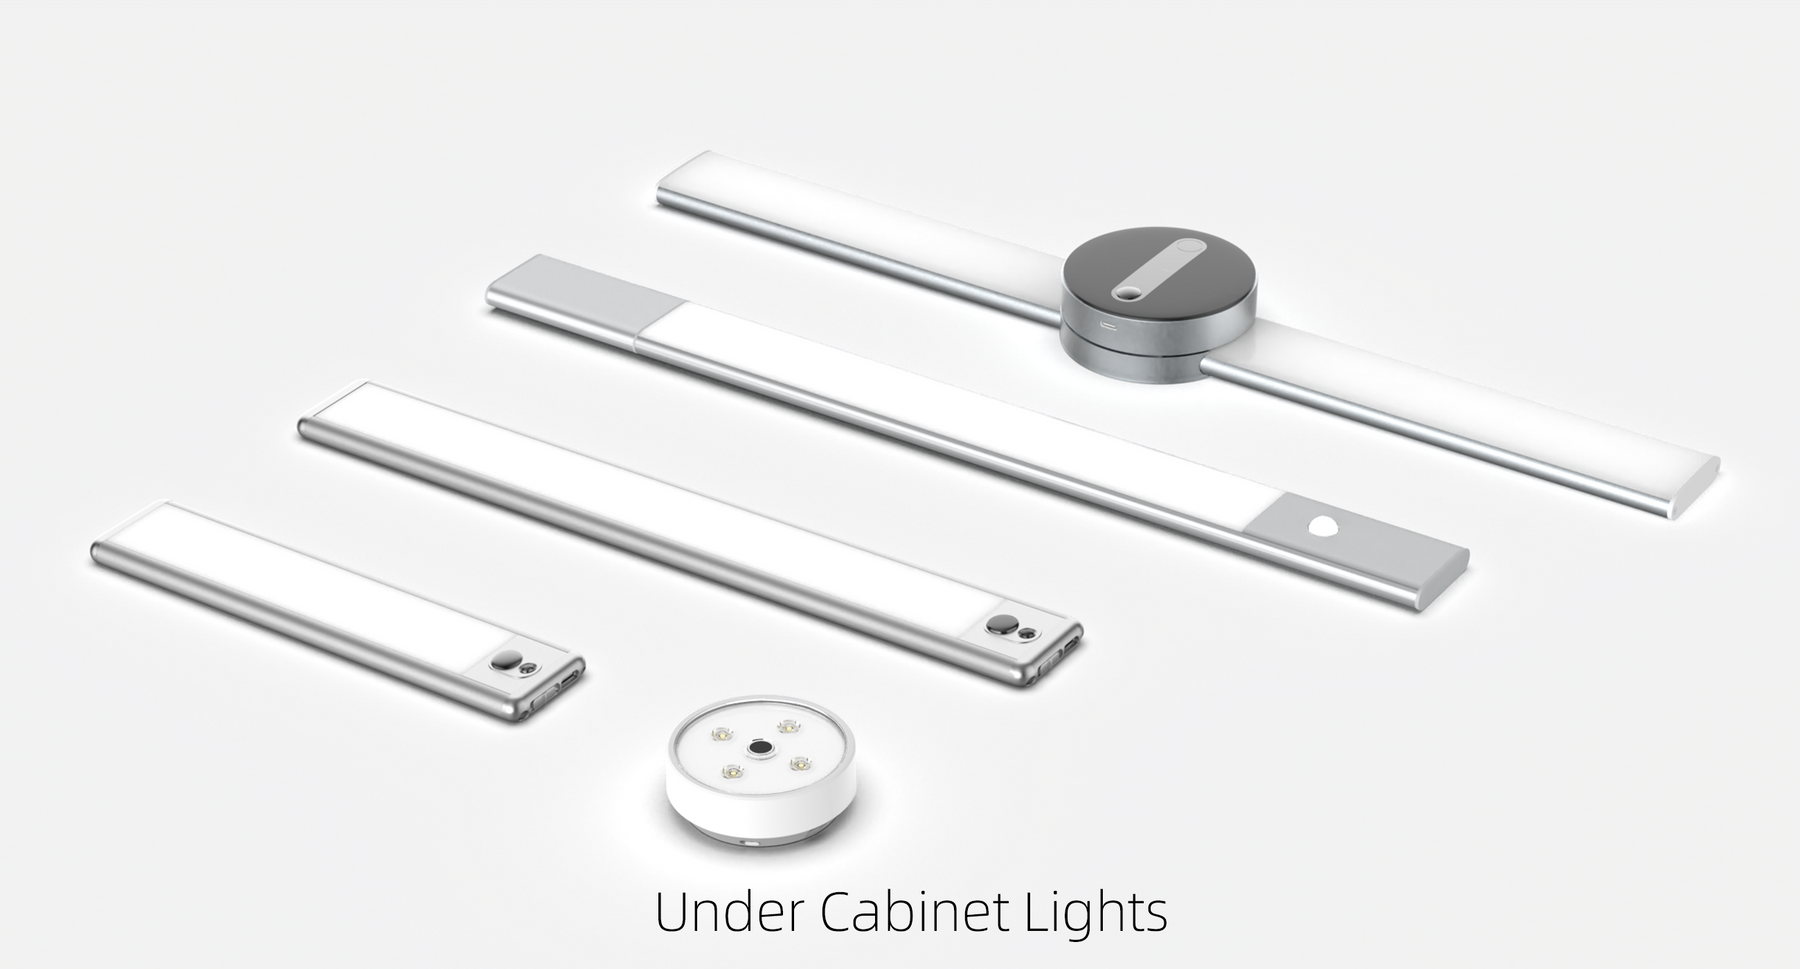 LED Closet Lights, EZVALO Upgraded 128 LED Motion Sensor Under Cabinet  Lighting Reviewed 